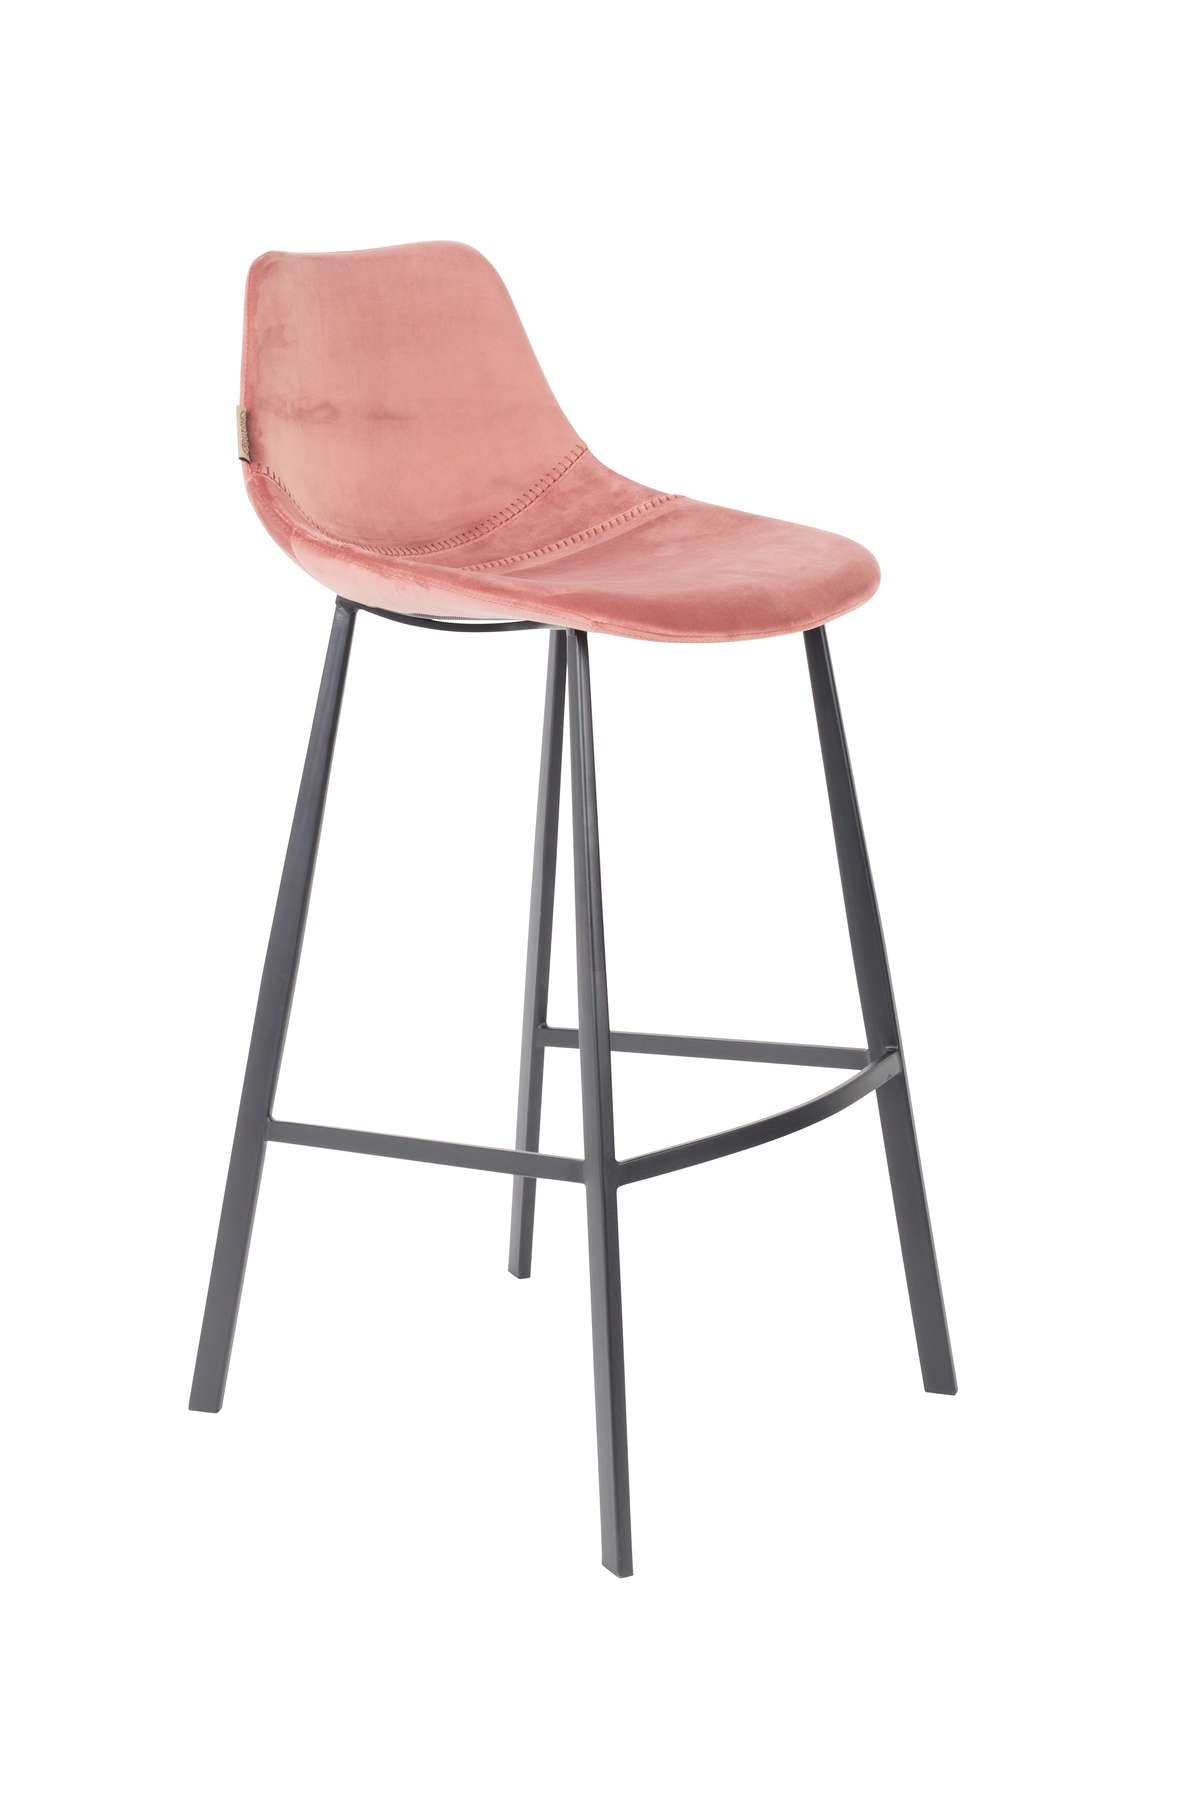 FRANKY bar stool 80 pink, Dutchbone, Eye on Design